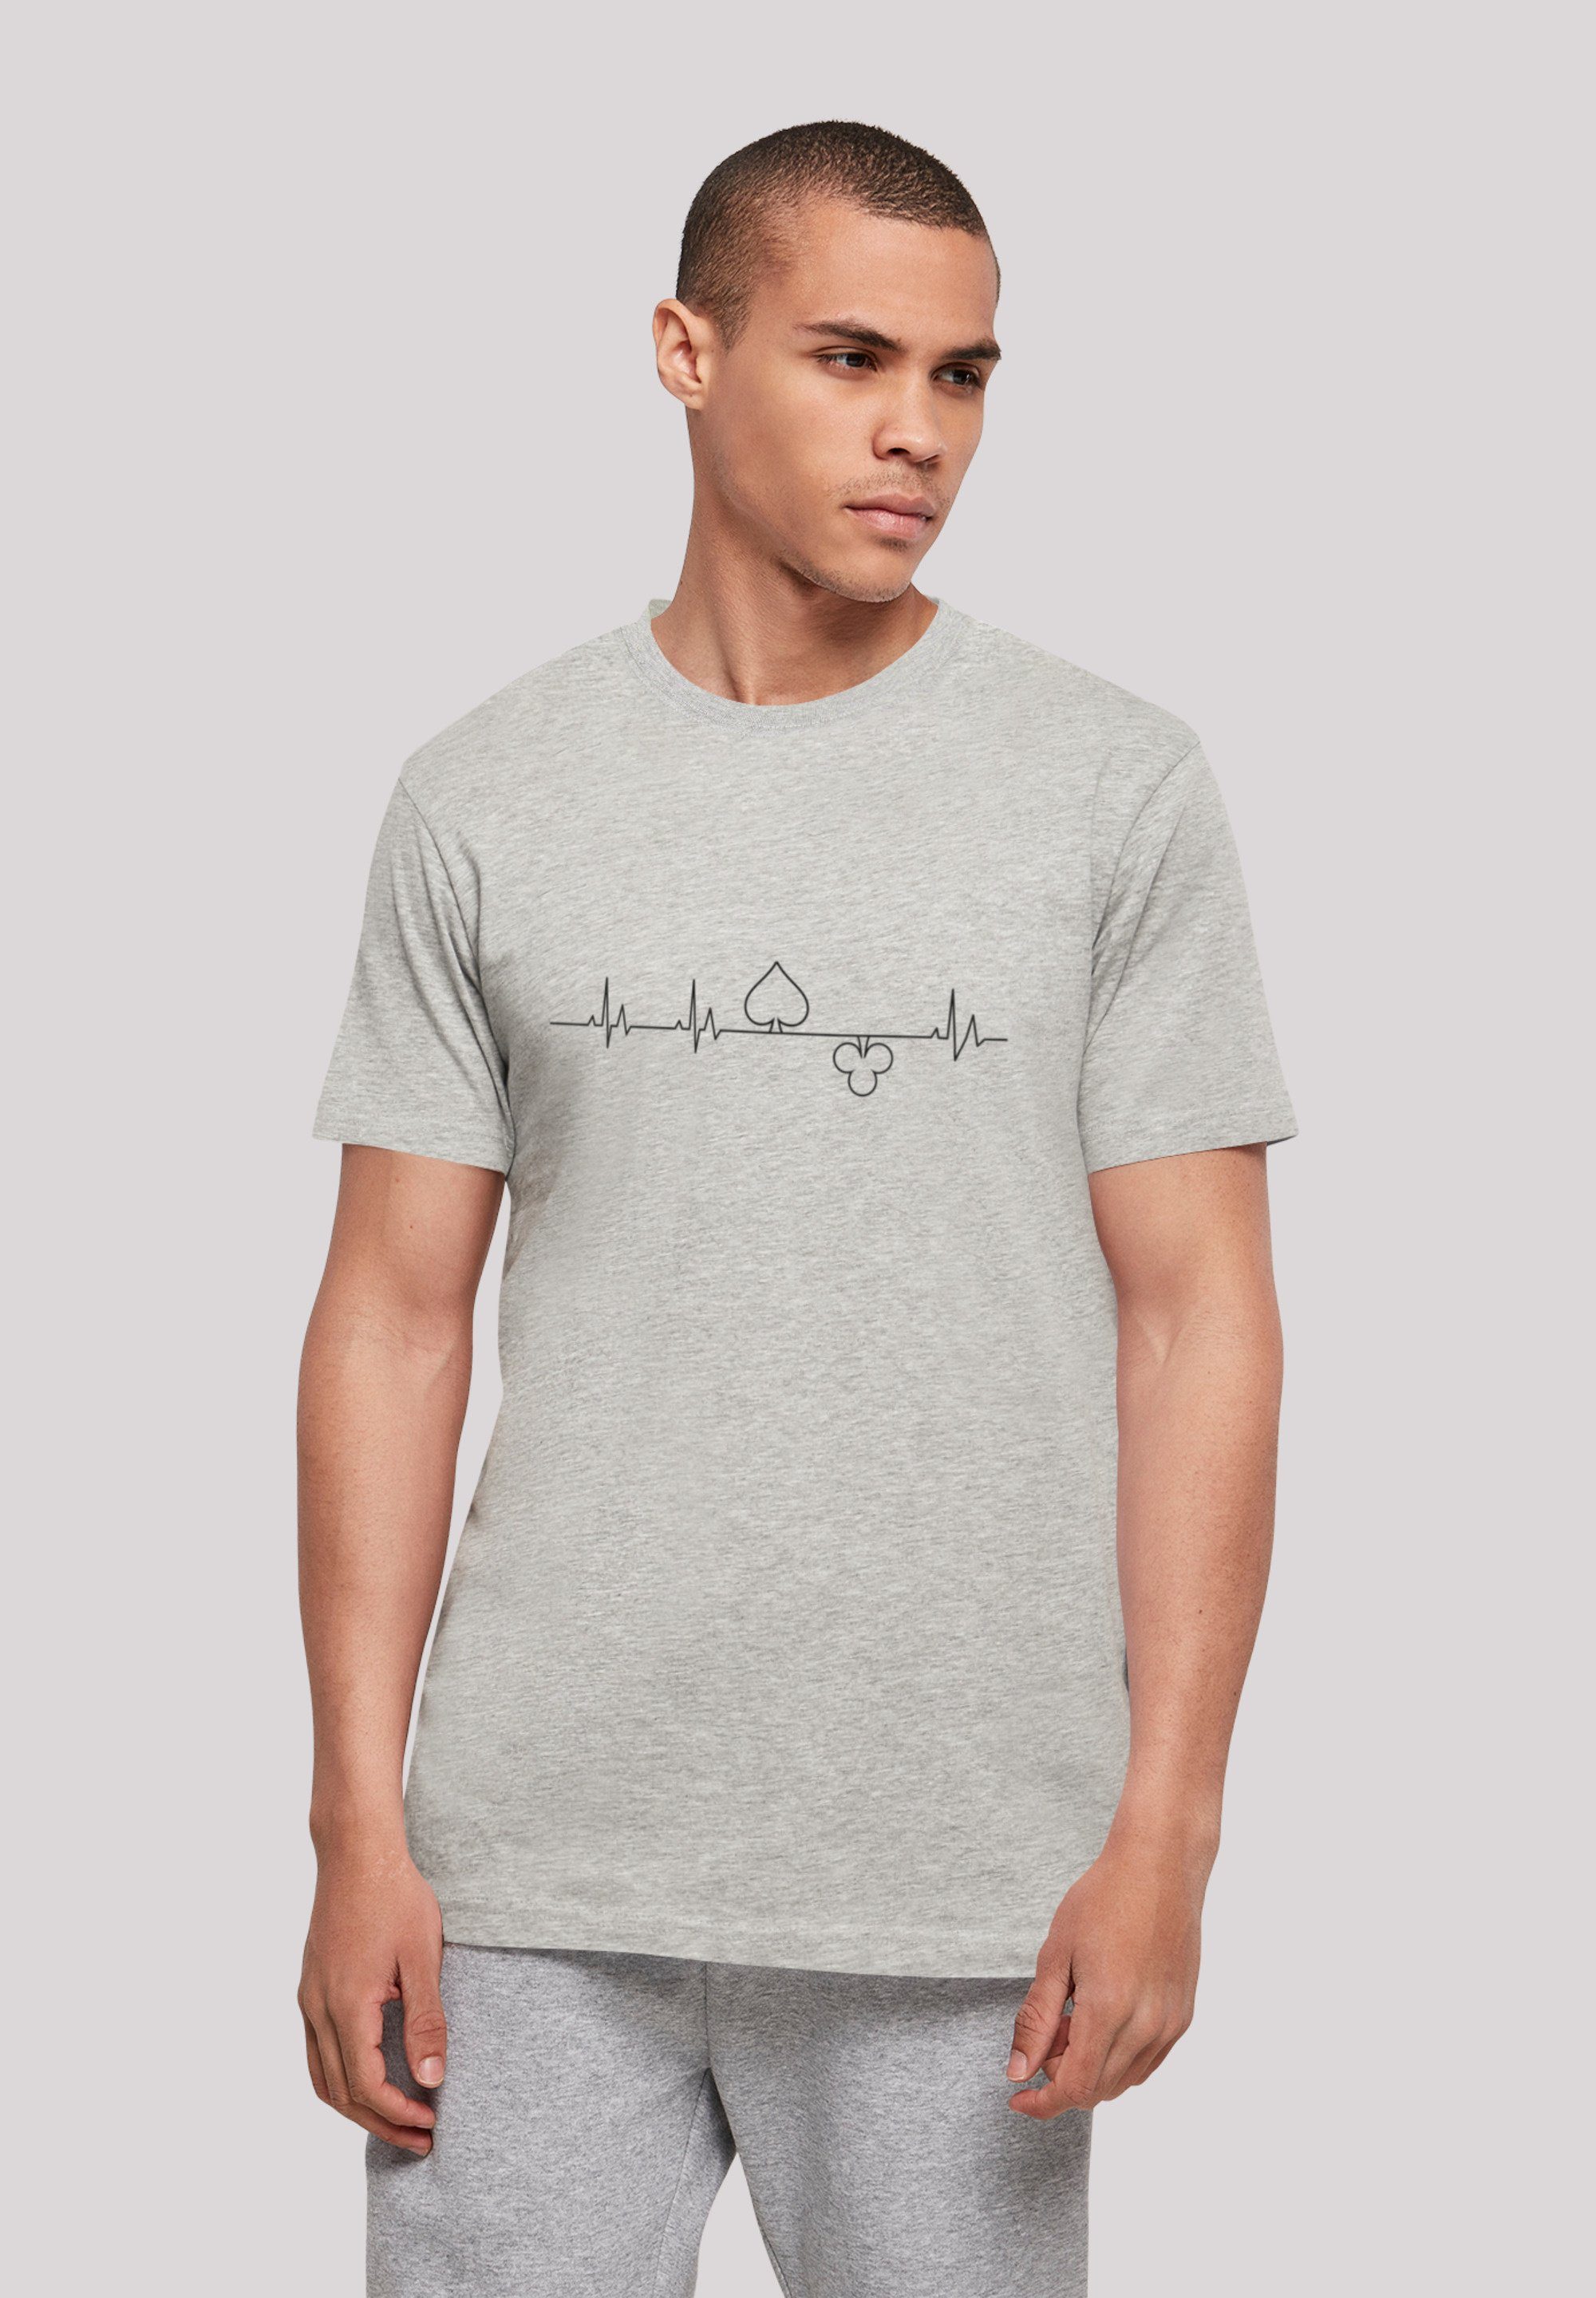 F4NT4STIC T-Shirt Heartbeat Herz Poker Print heather grey